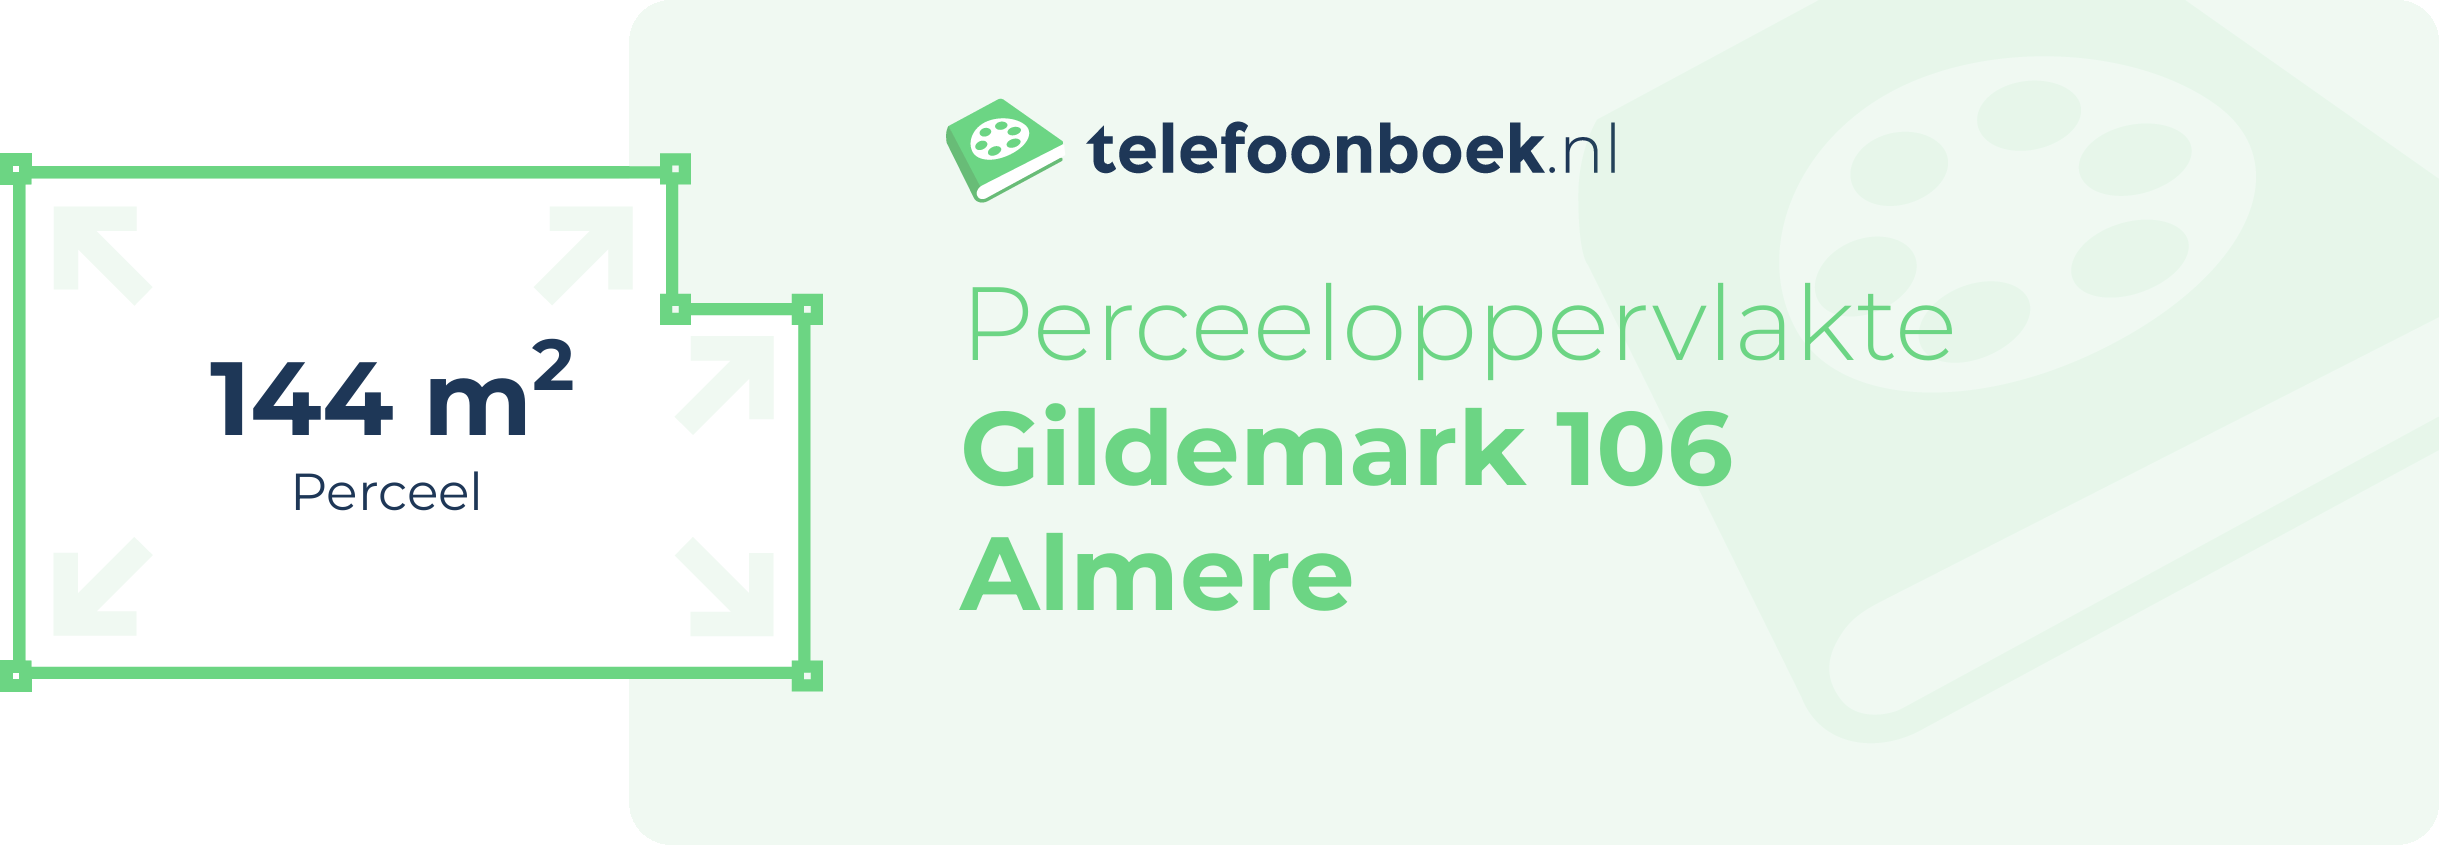 Perceeloppervlakte Gildemark 106 Almere